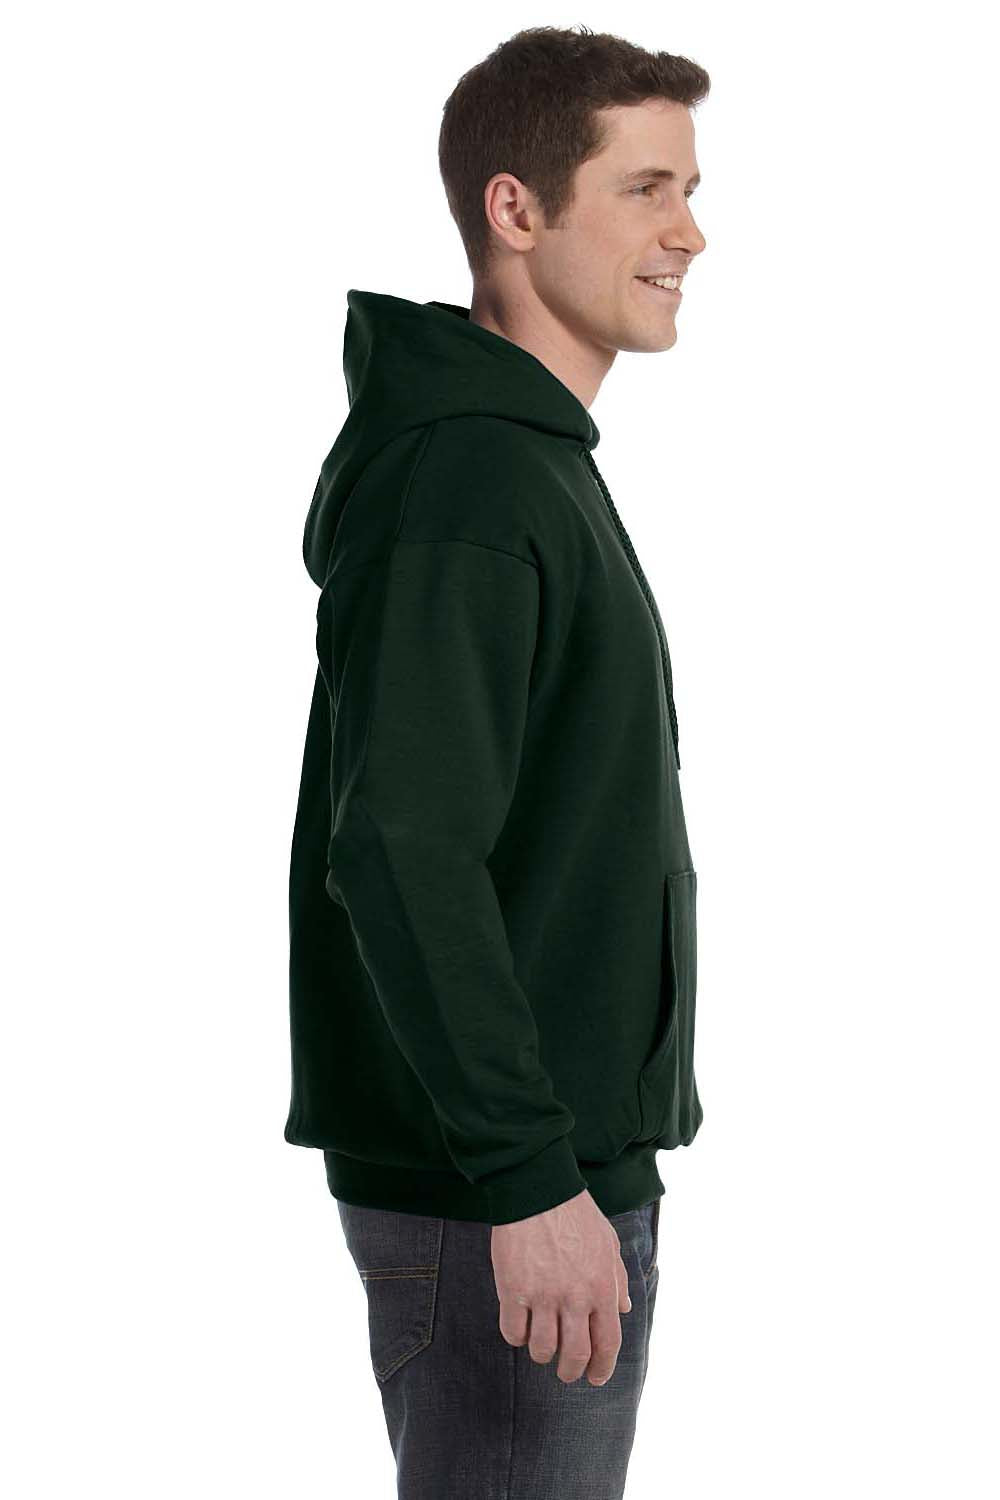 Hanes P170 Mens EcoSmart Print Pro XP Hooded Sweatshirt Hoodie Forest Green Side